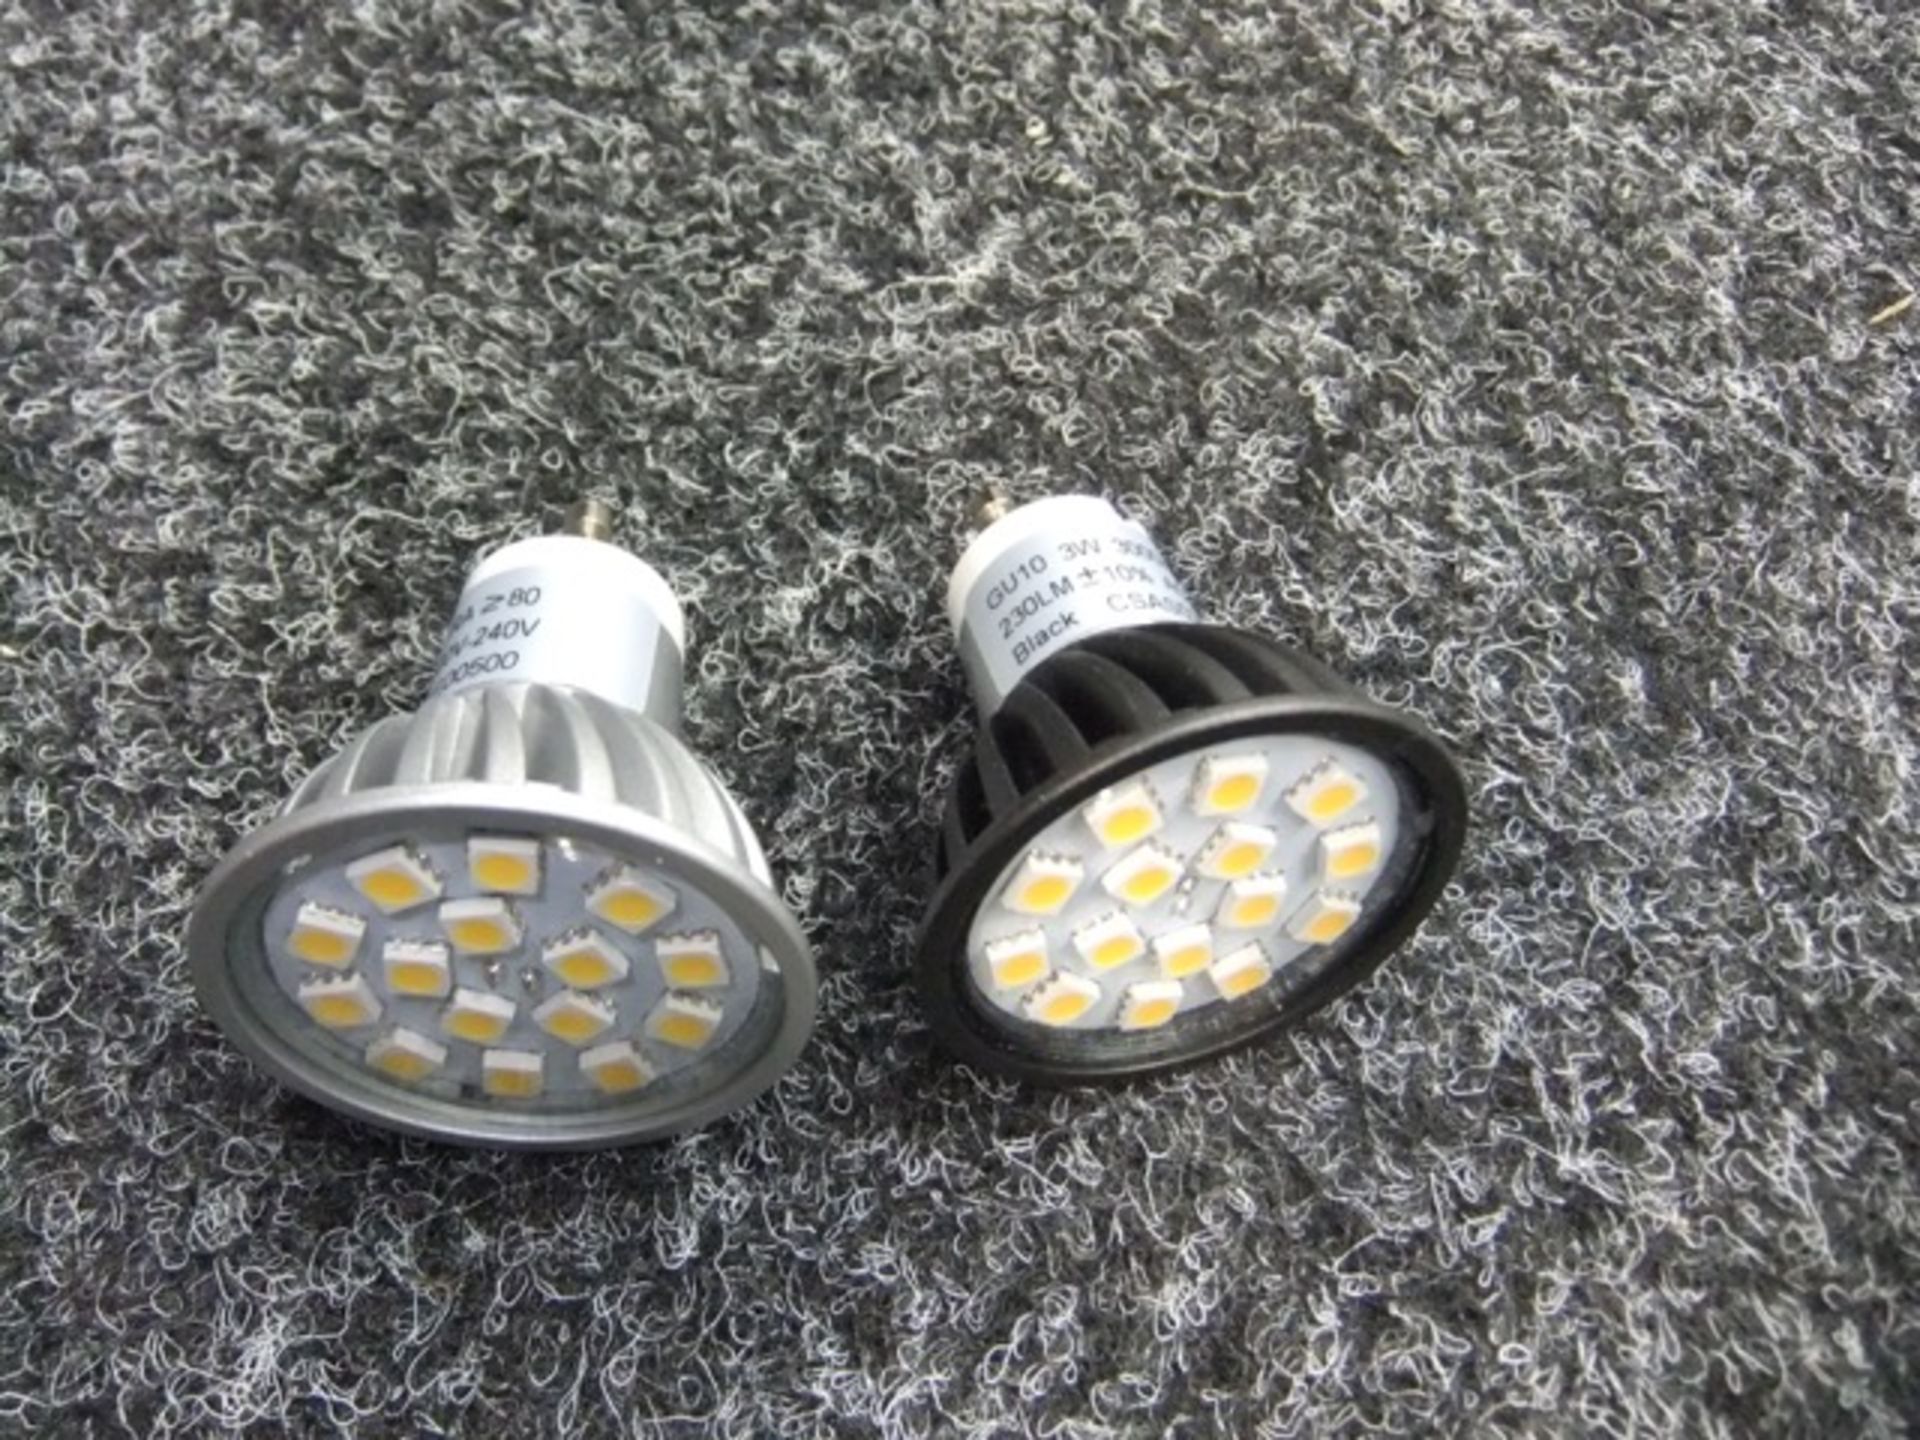 QTY 72 of 3WATT LED GU10 WARMWHITE HIGH BRIGHTNESS LAMPS